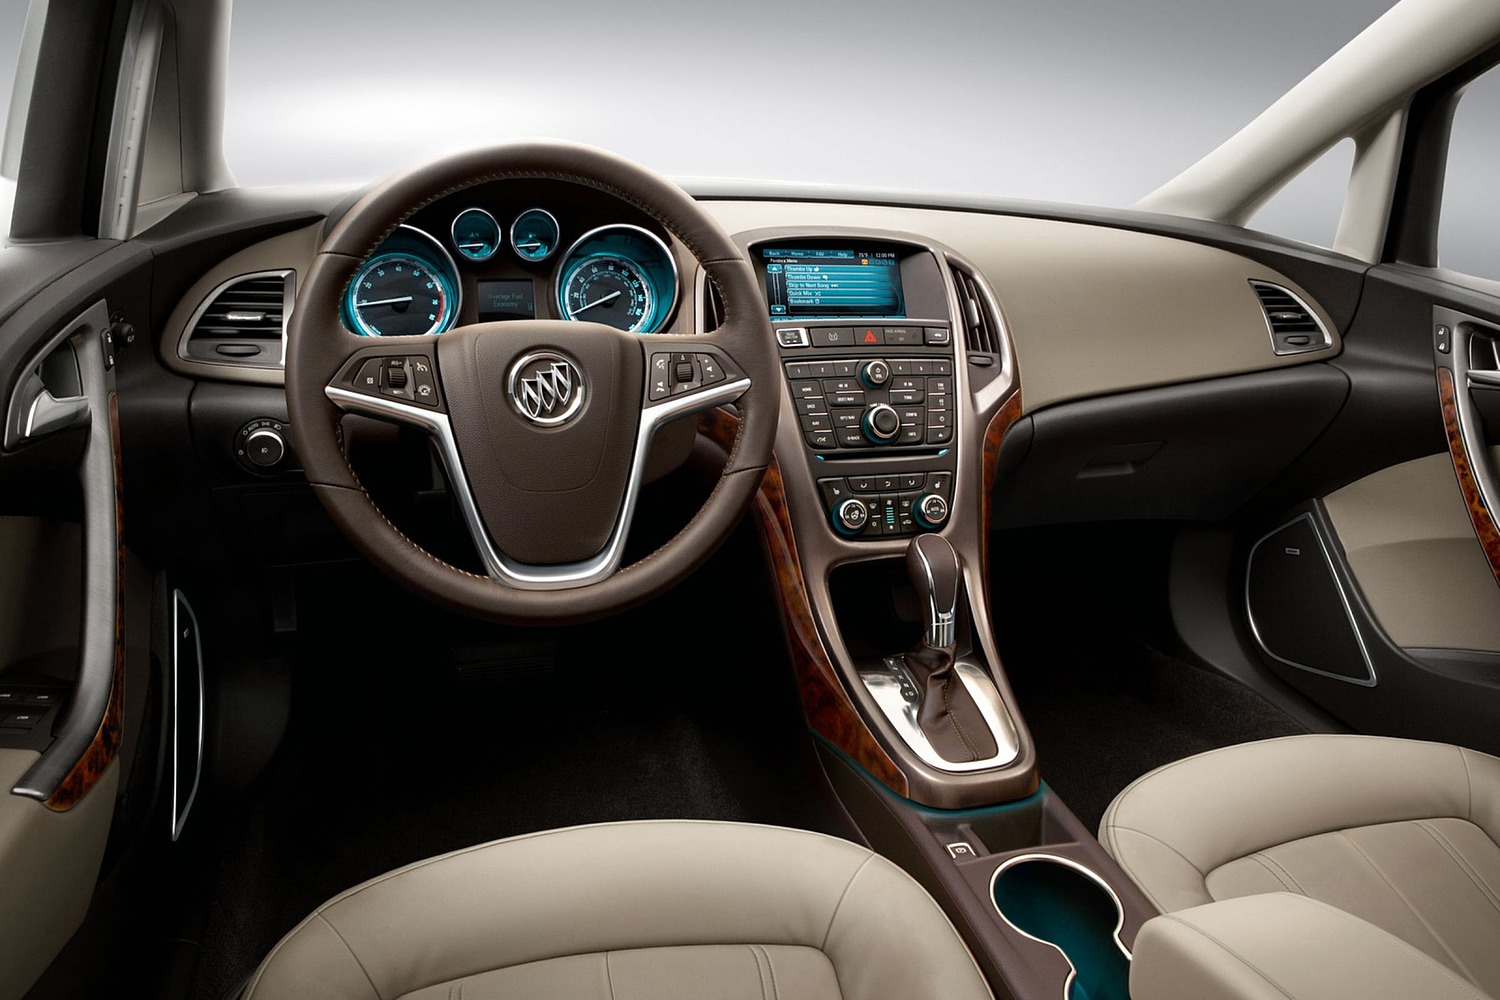 Buick Verano Leather Group Sedan Dashboard Shown (2015 model year shown)